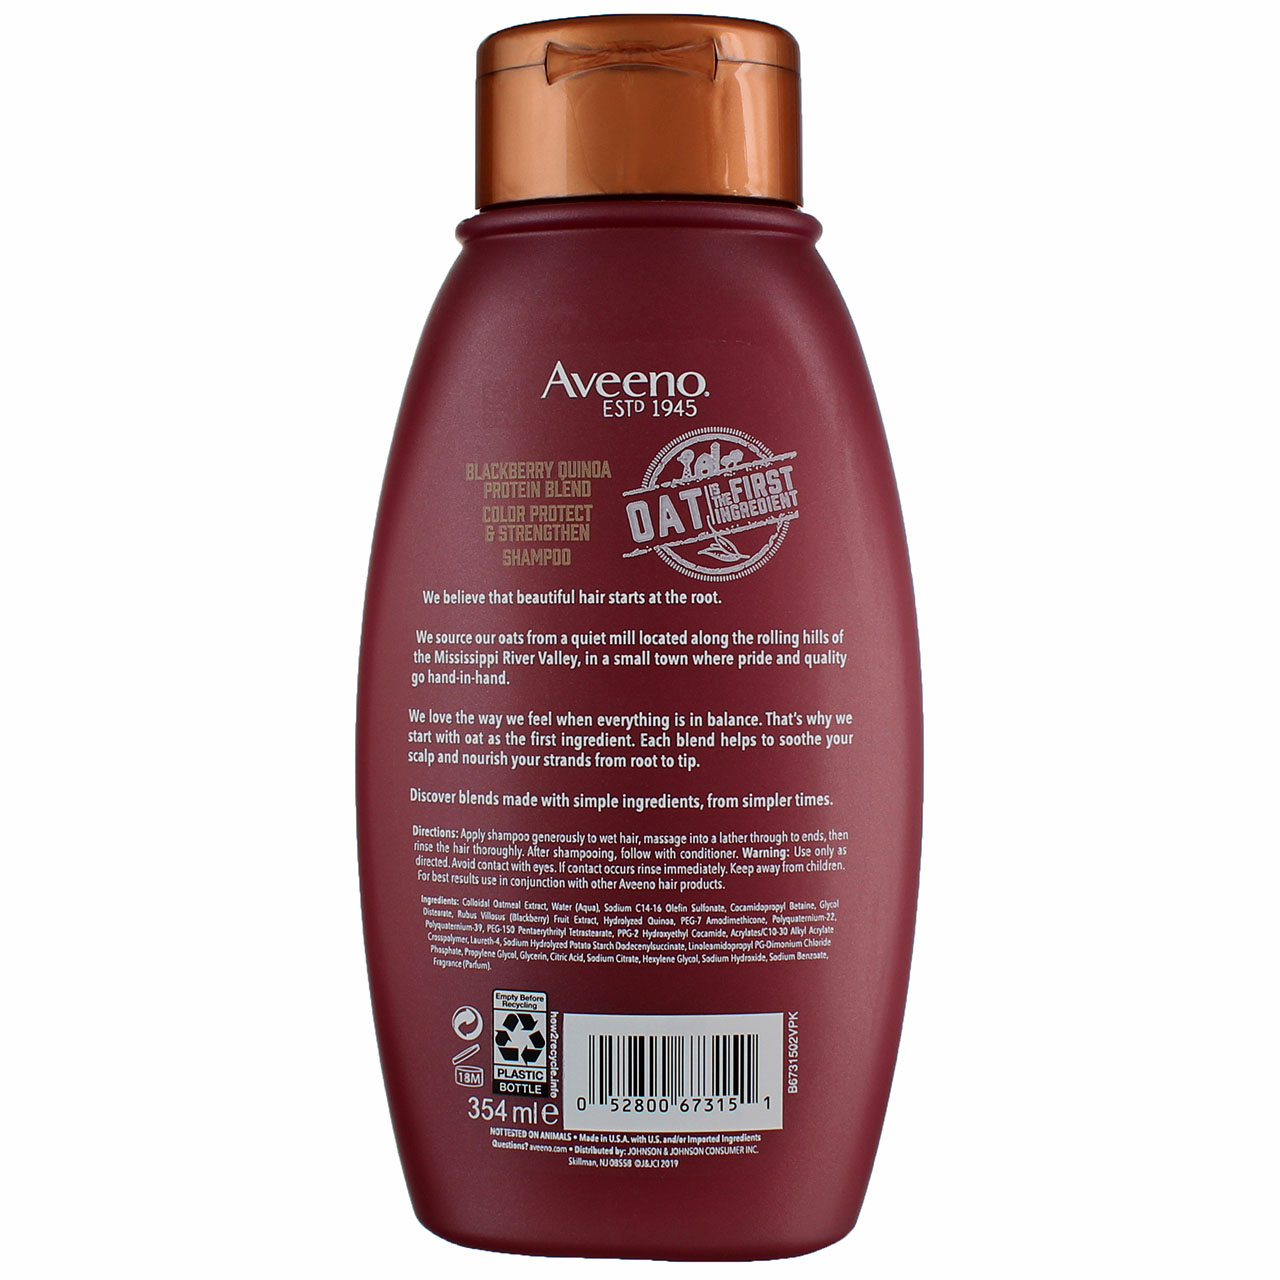 AVEENO Blackberry Quinoa Protein Blend Shampoo, 12 oz (Pack of 2) - image 2 of 2